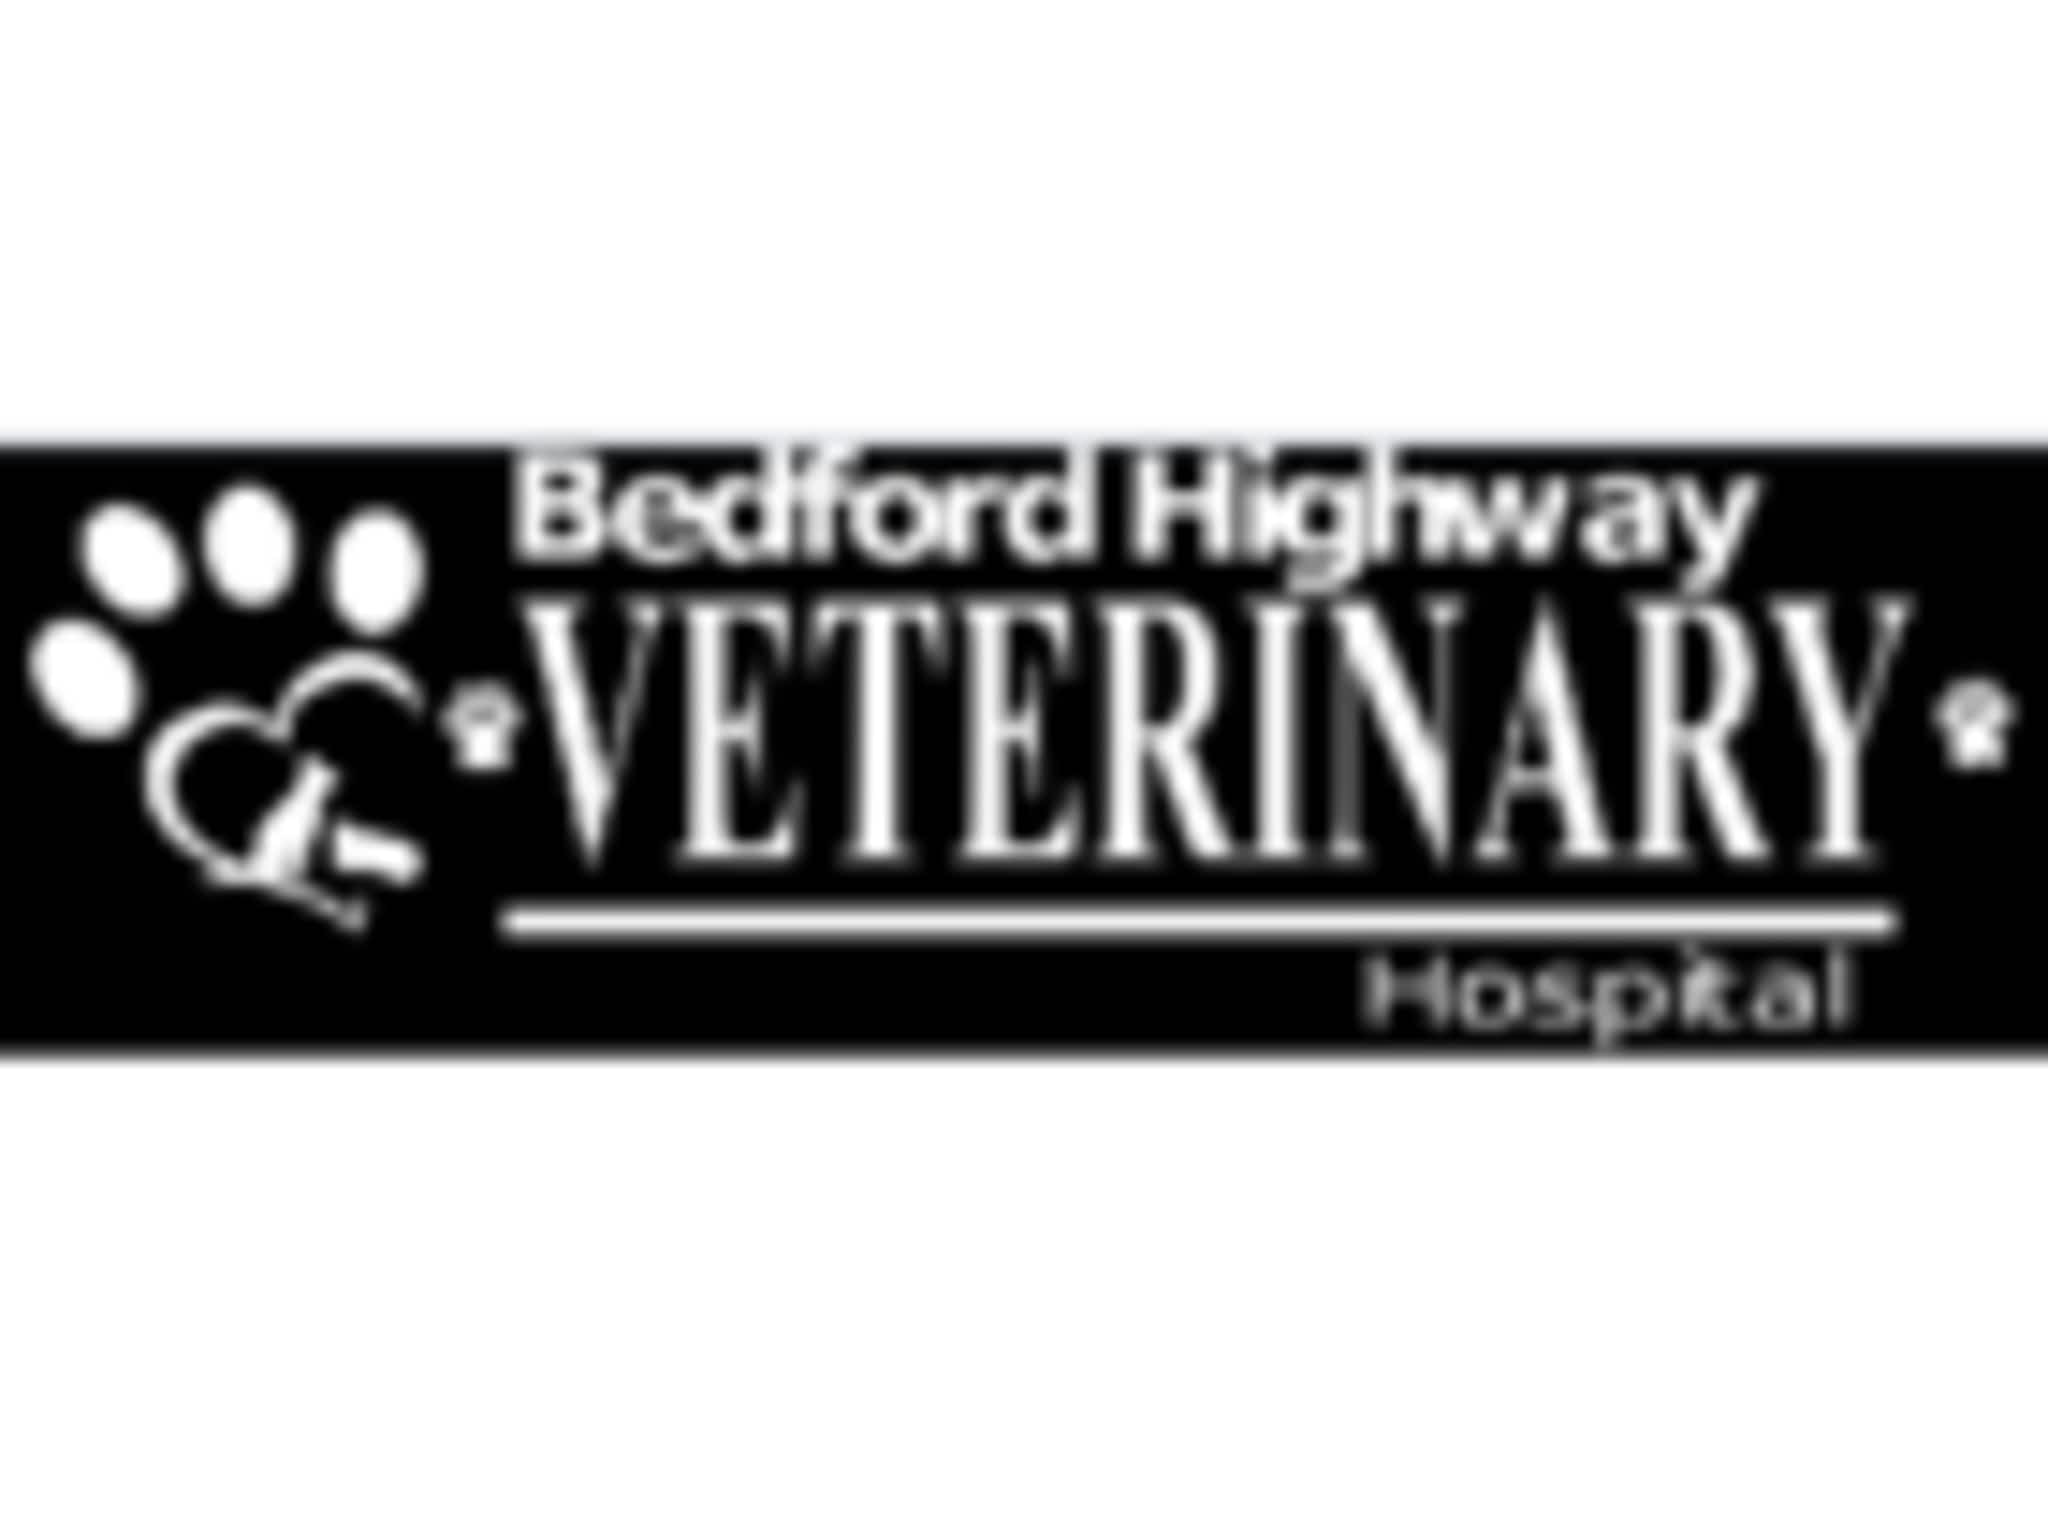 photo Bedford Highway Veterinarian Hospital